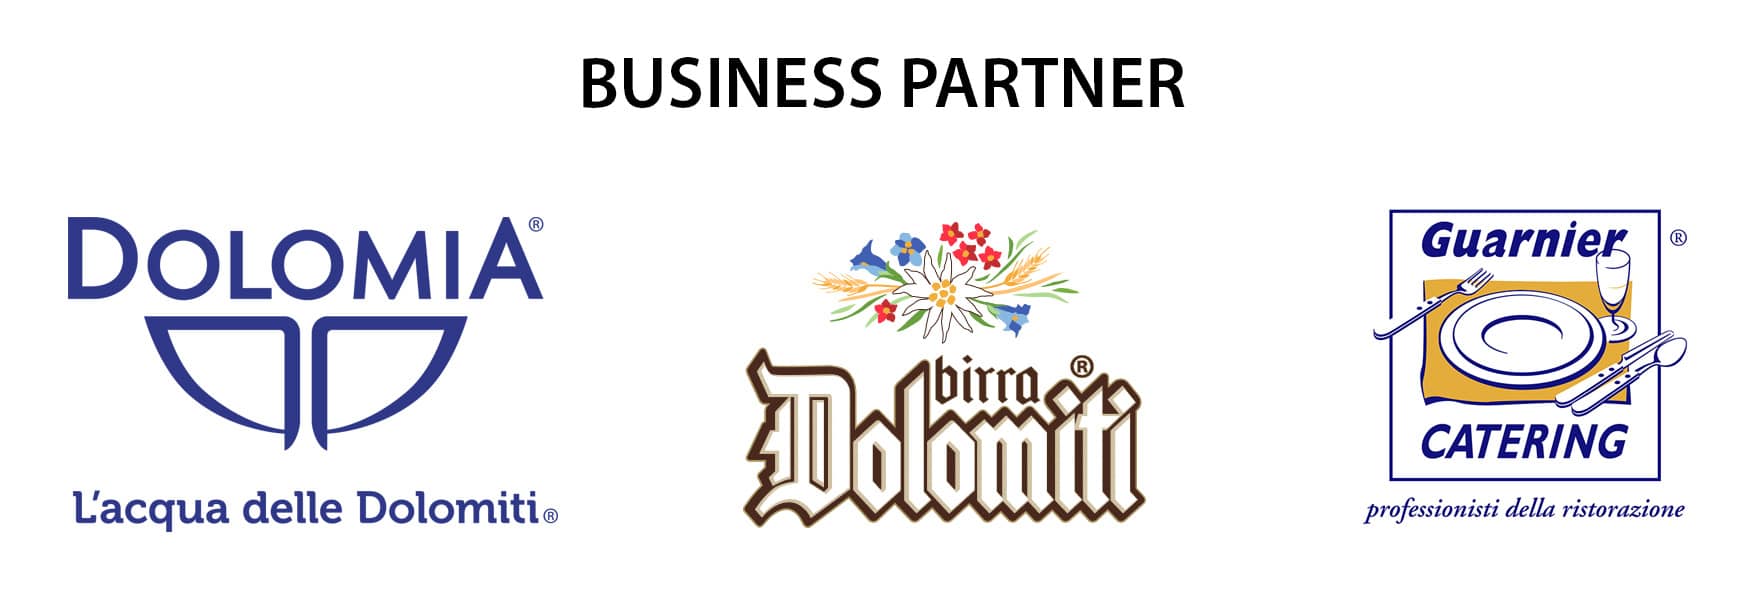 business partner dolomia-birra-guarnier